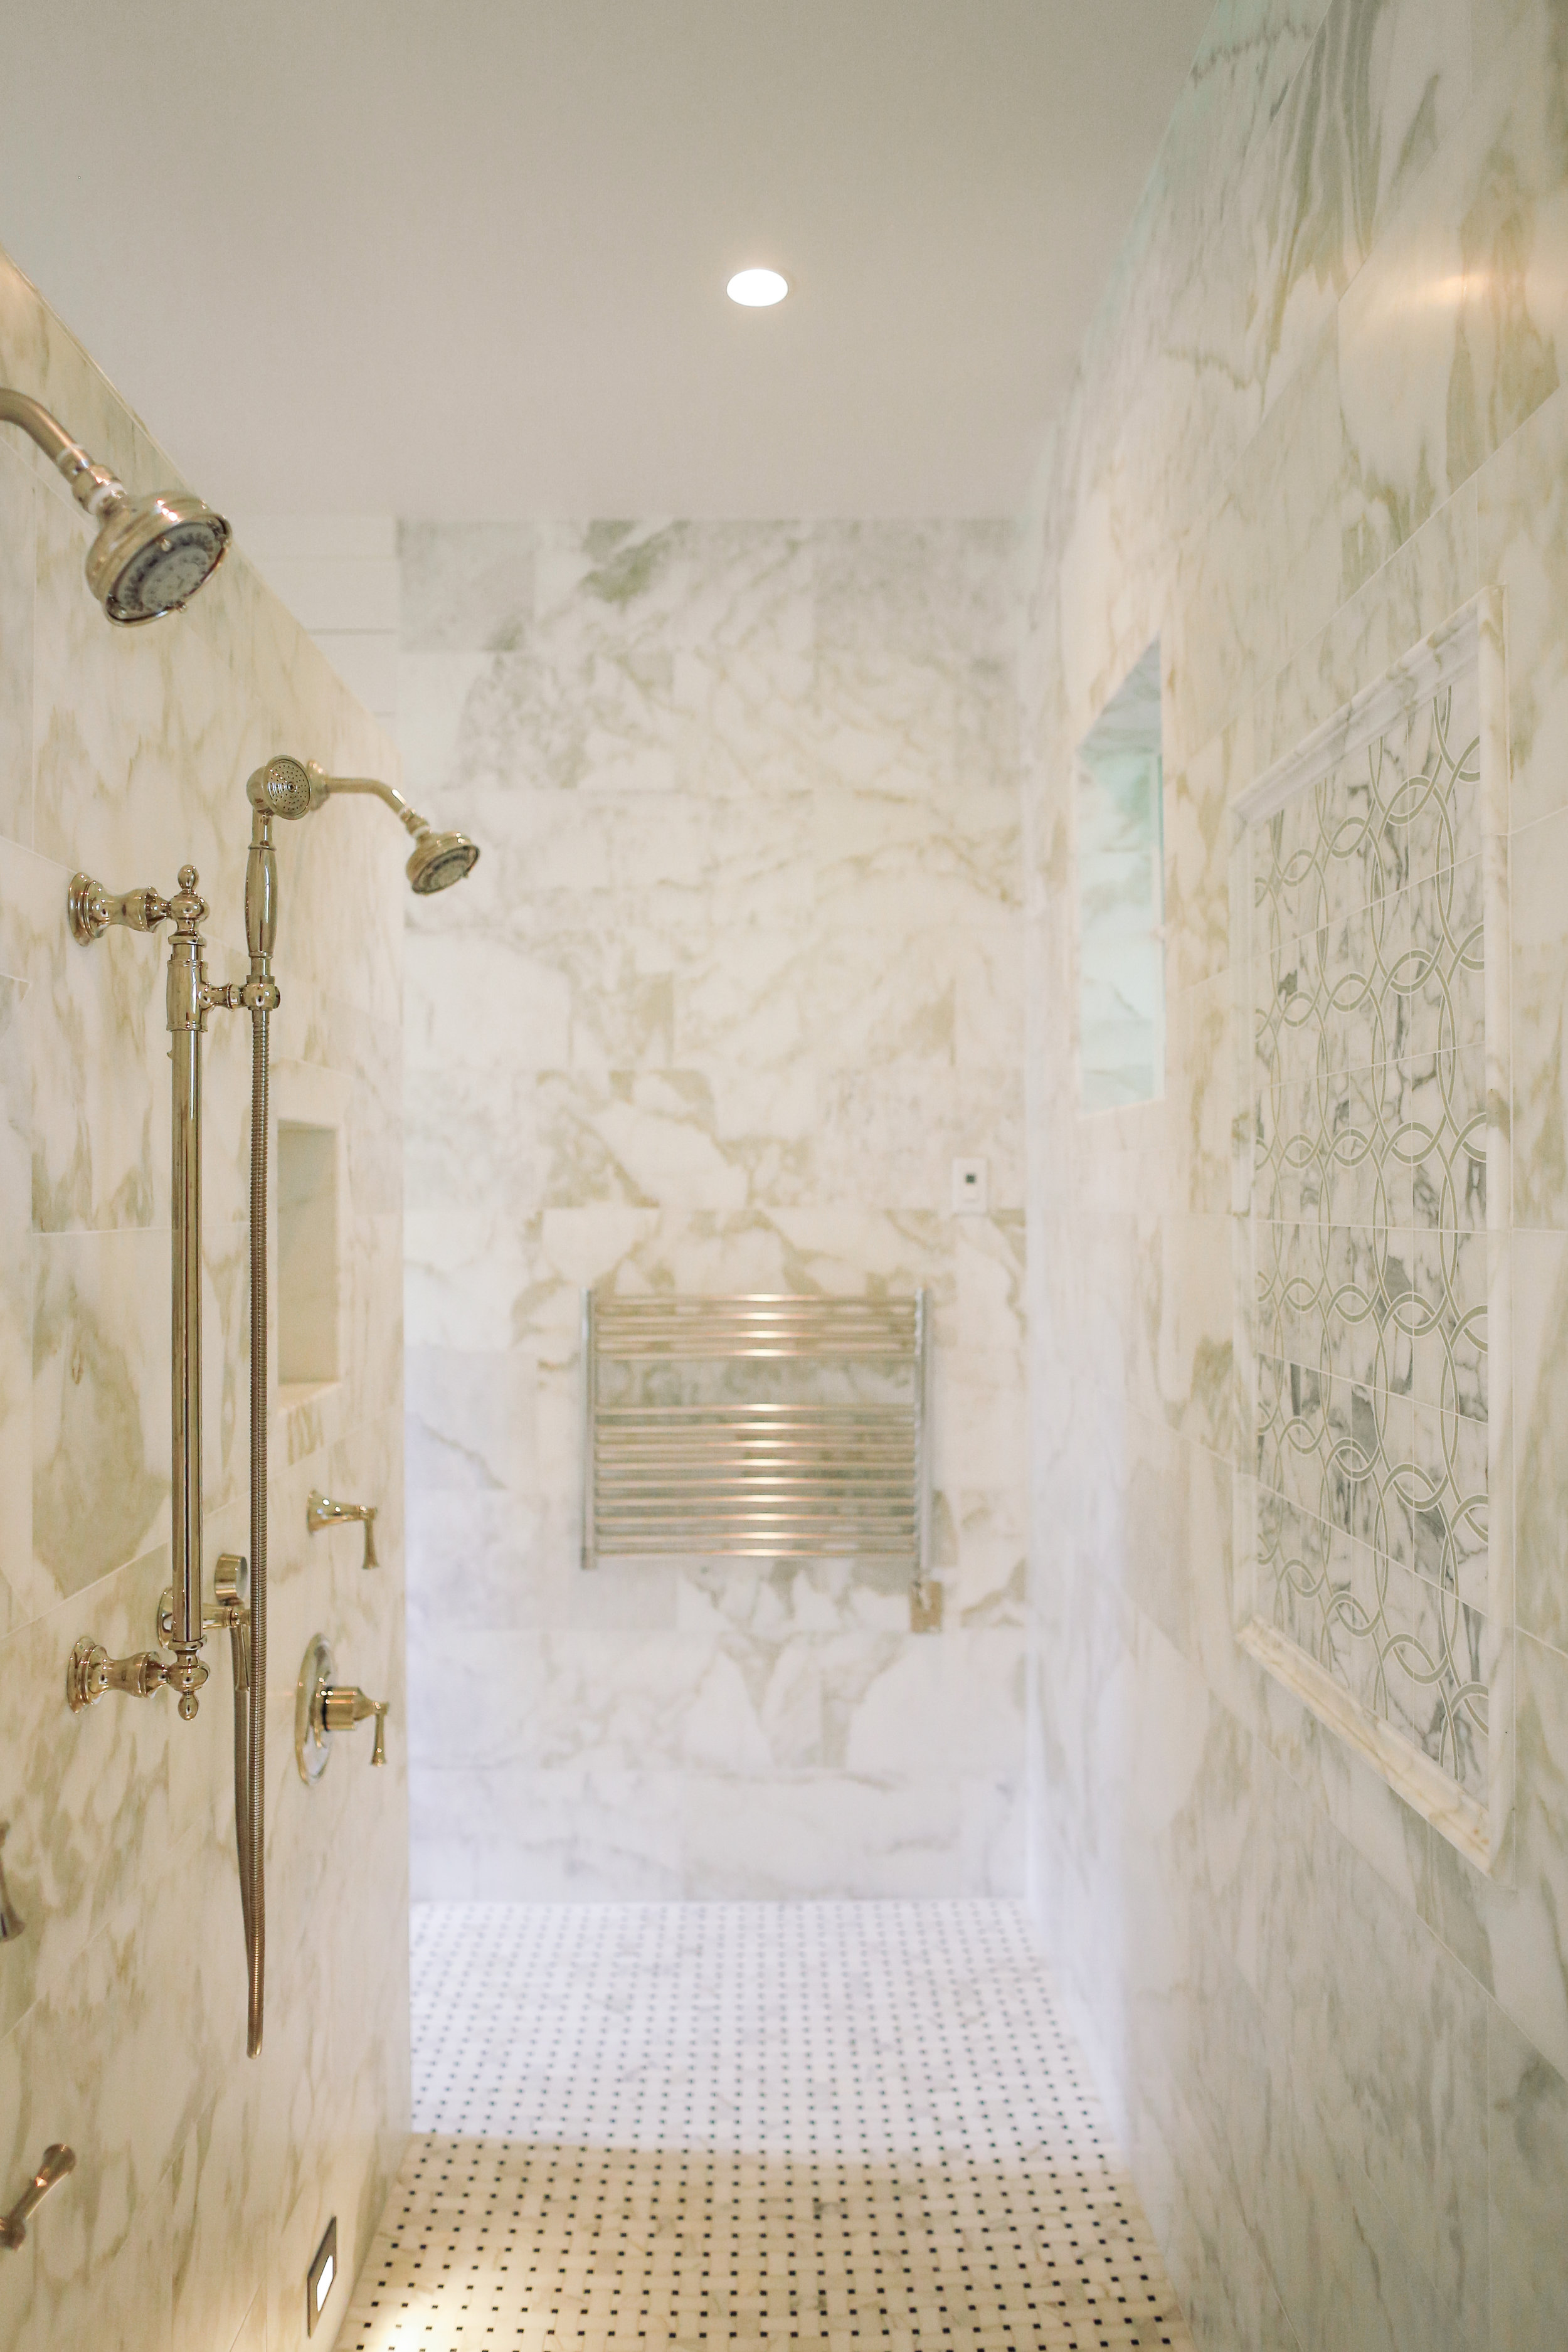 Creating a Modern Bathroom Design With Mosaic Tiles - Savannah